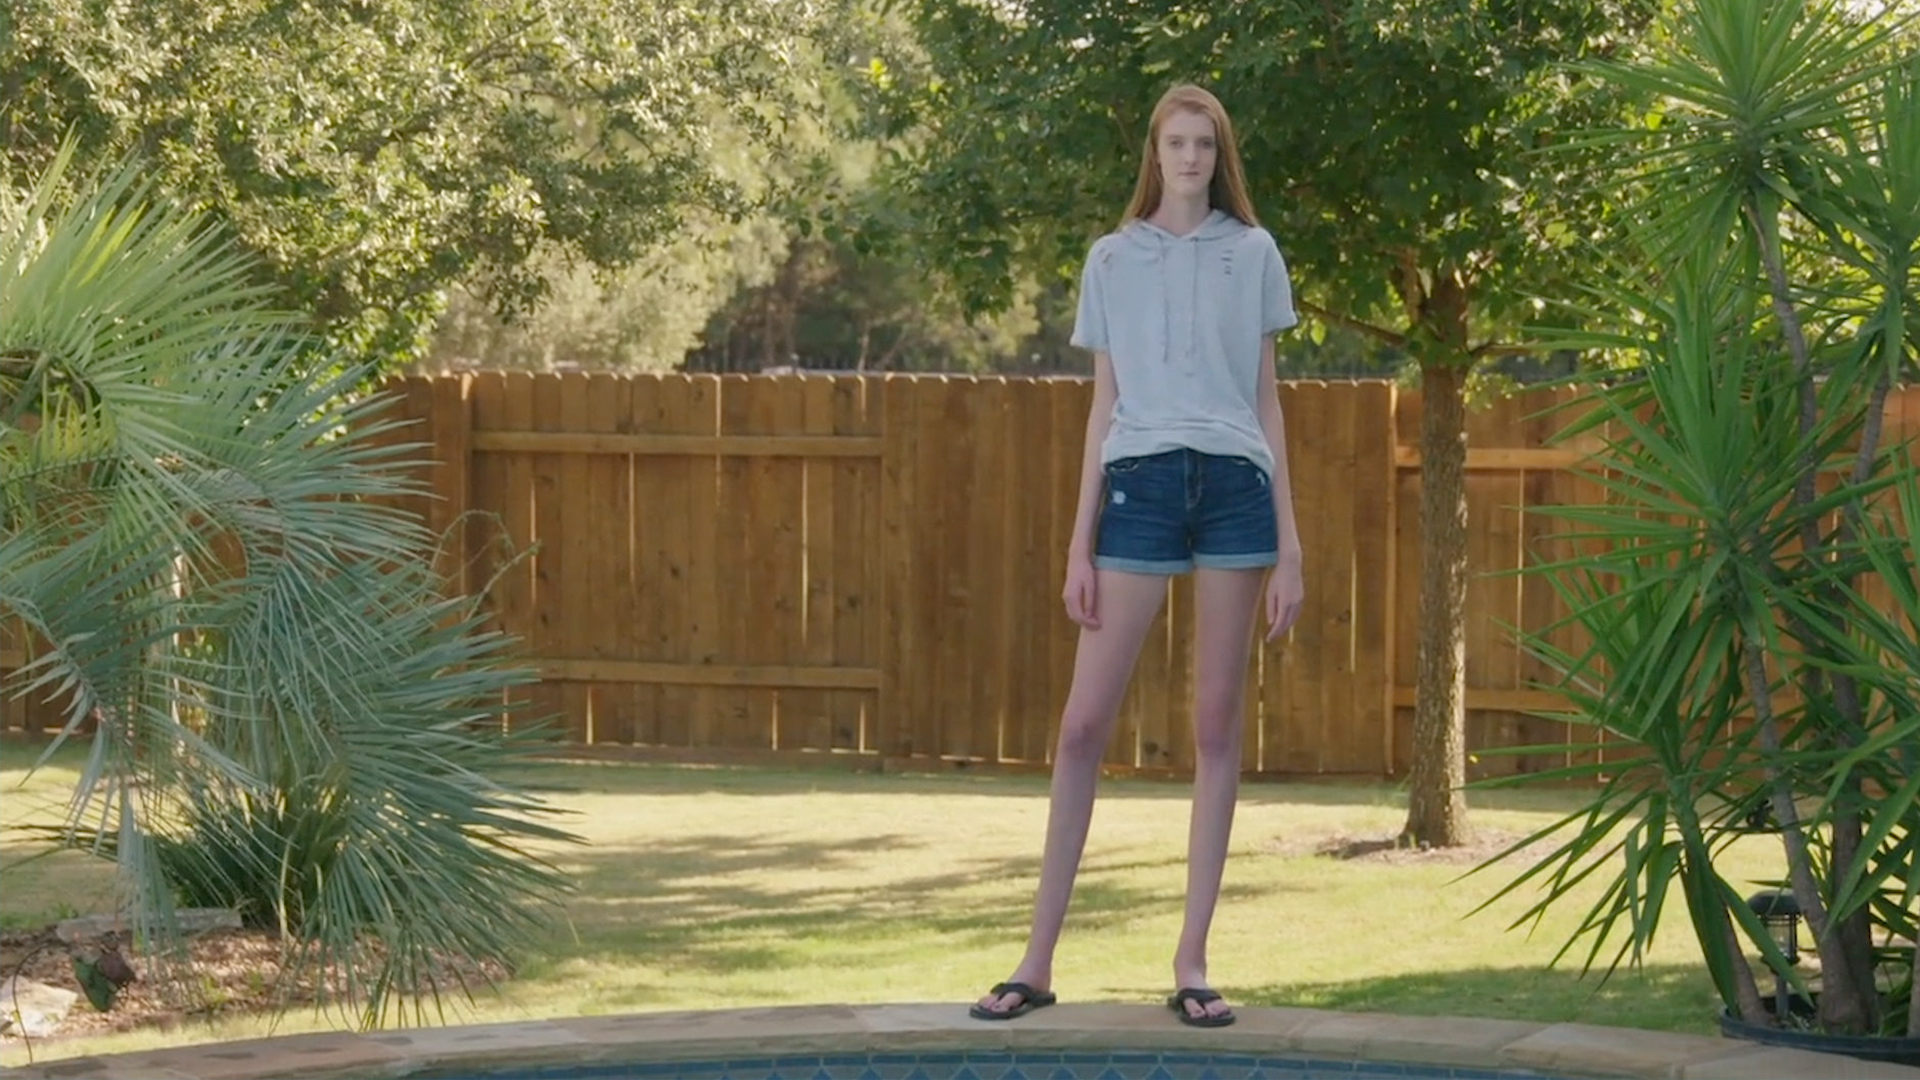 16-Year-Old Girl Has World's Longest Legs | RTM ...